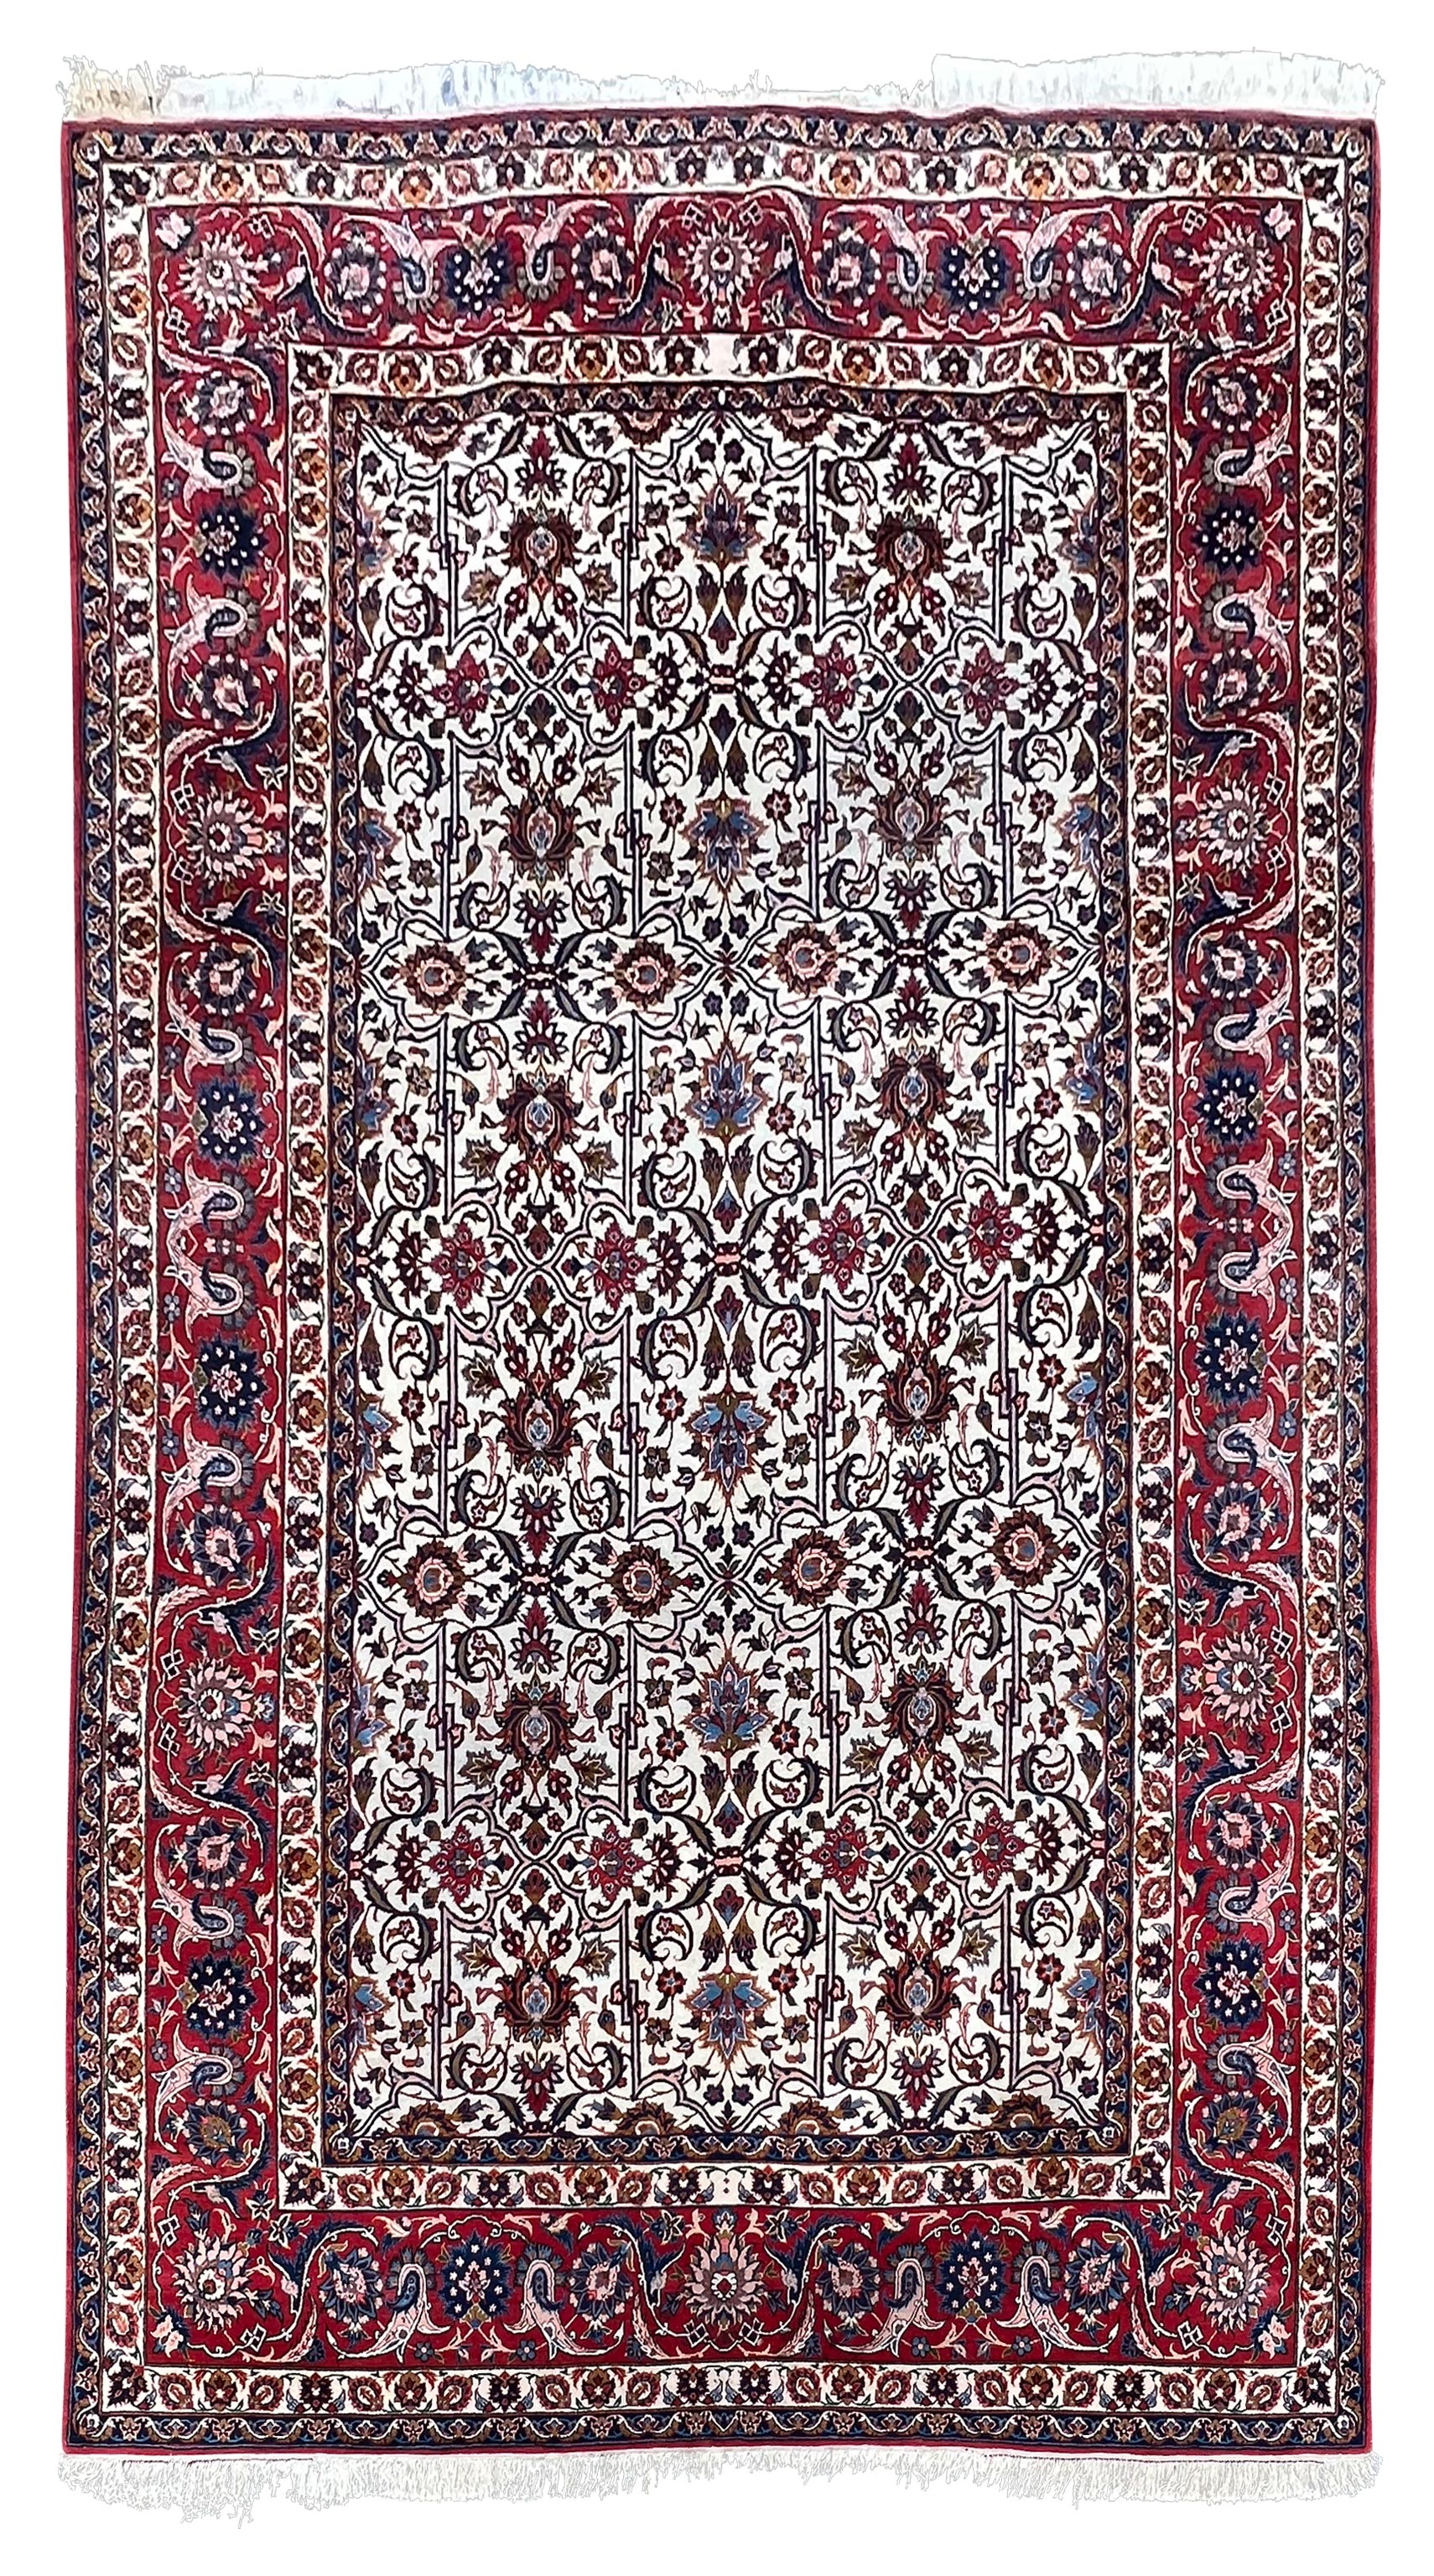 Isfahan. Najafabad. Workshop carpet. Light ground. Patterned through.